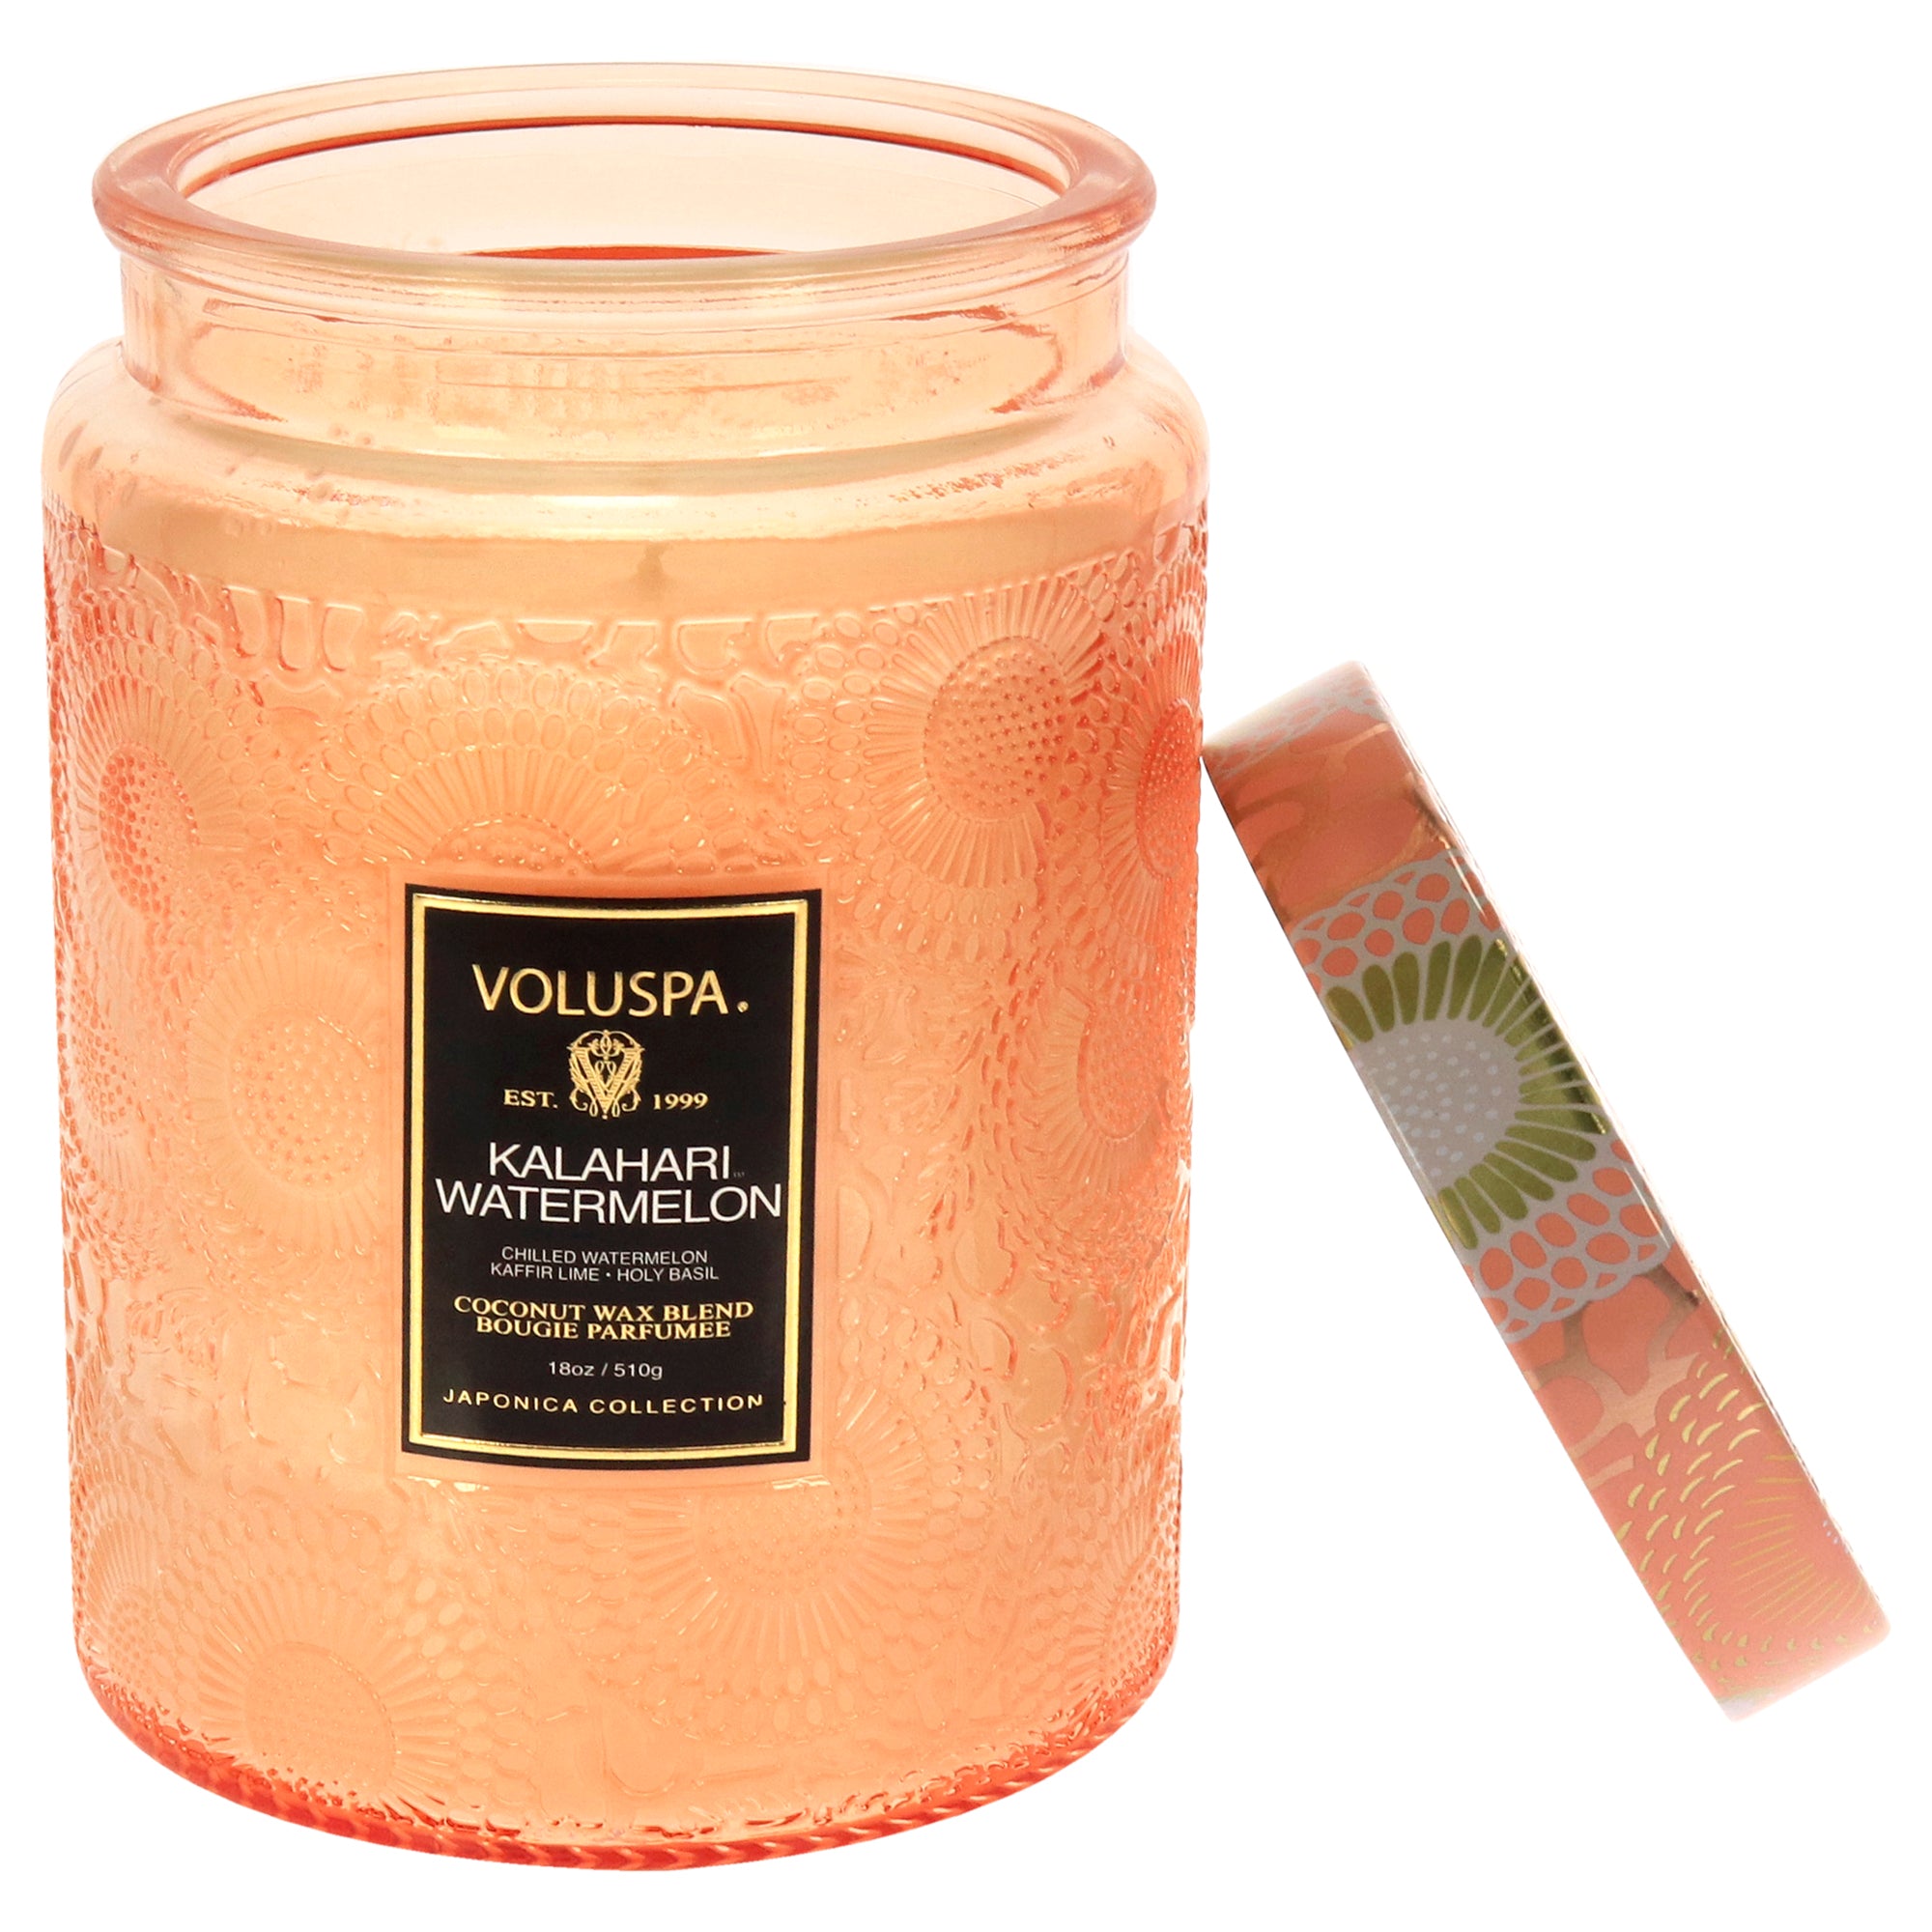 Kalahari Watermelon - Large by Voluspa for Unisex - 18 oz Candle